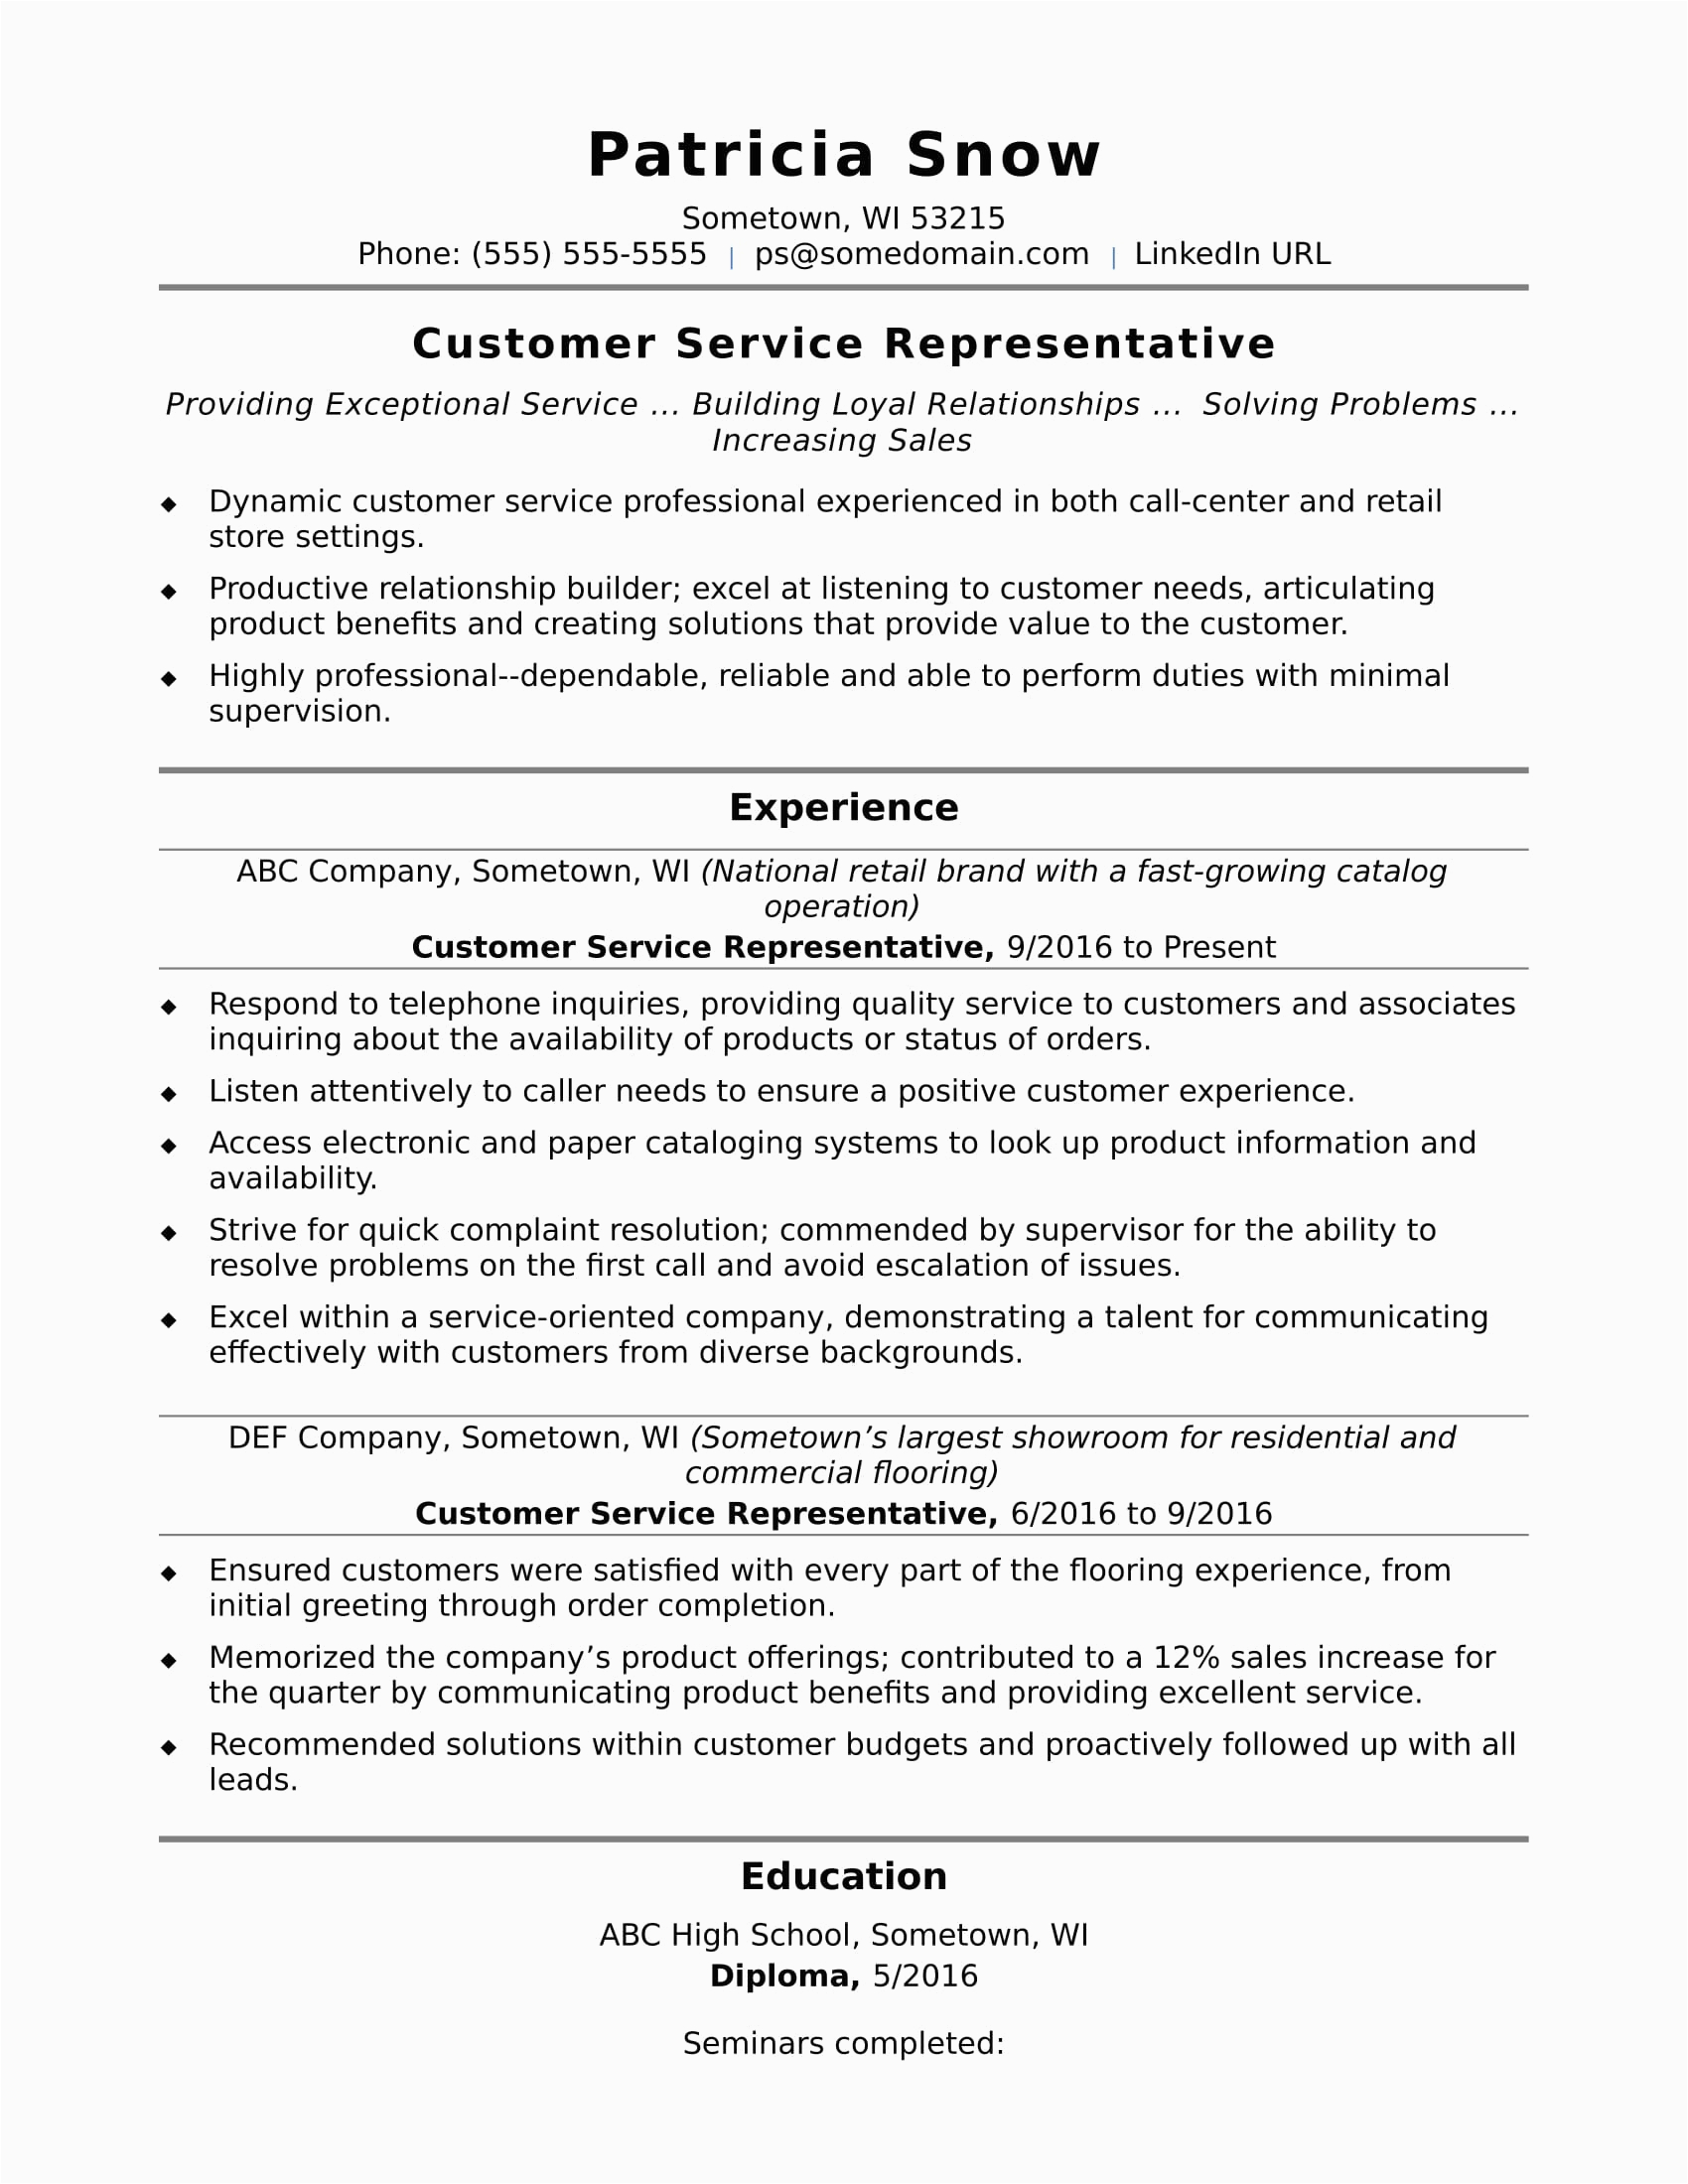 Sample Resume for Customer Service Representative Telecommunications Customer Service Representative Resume Sample